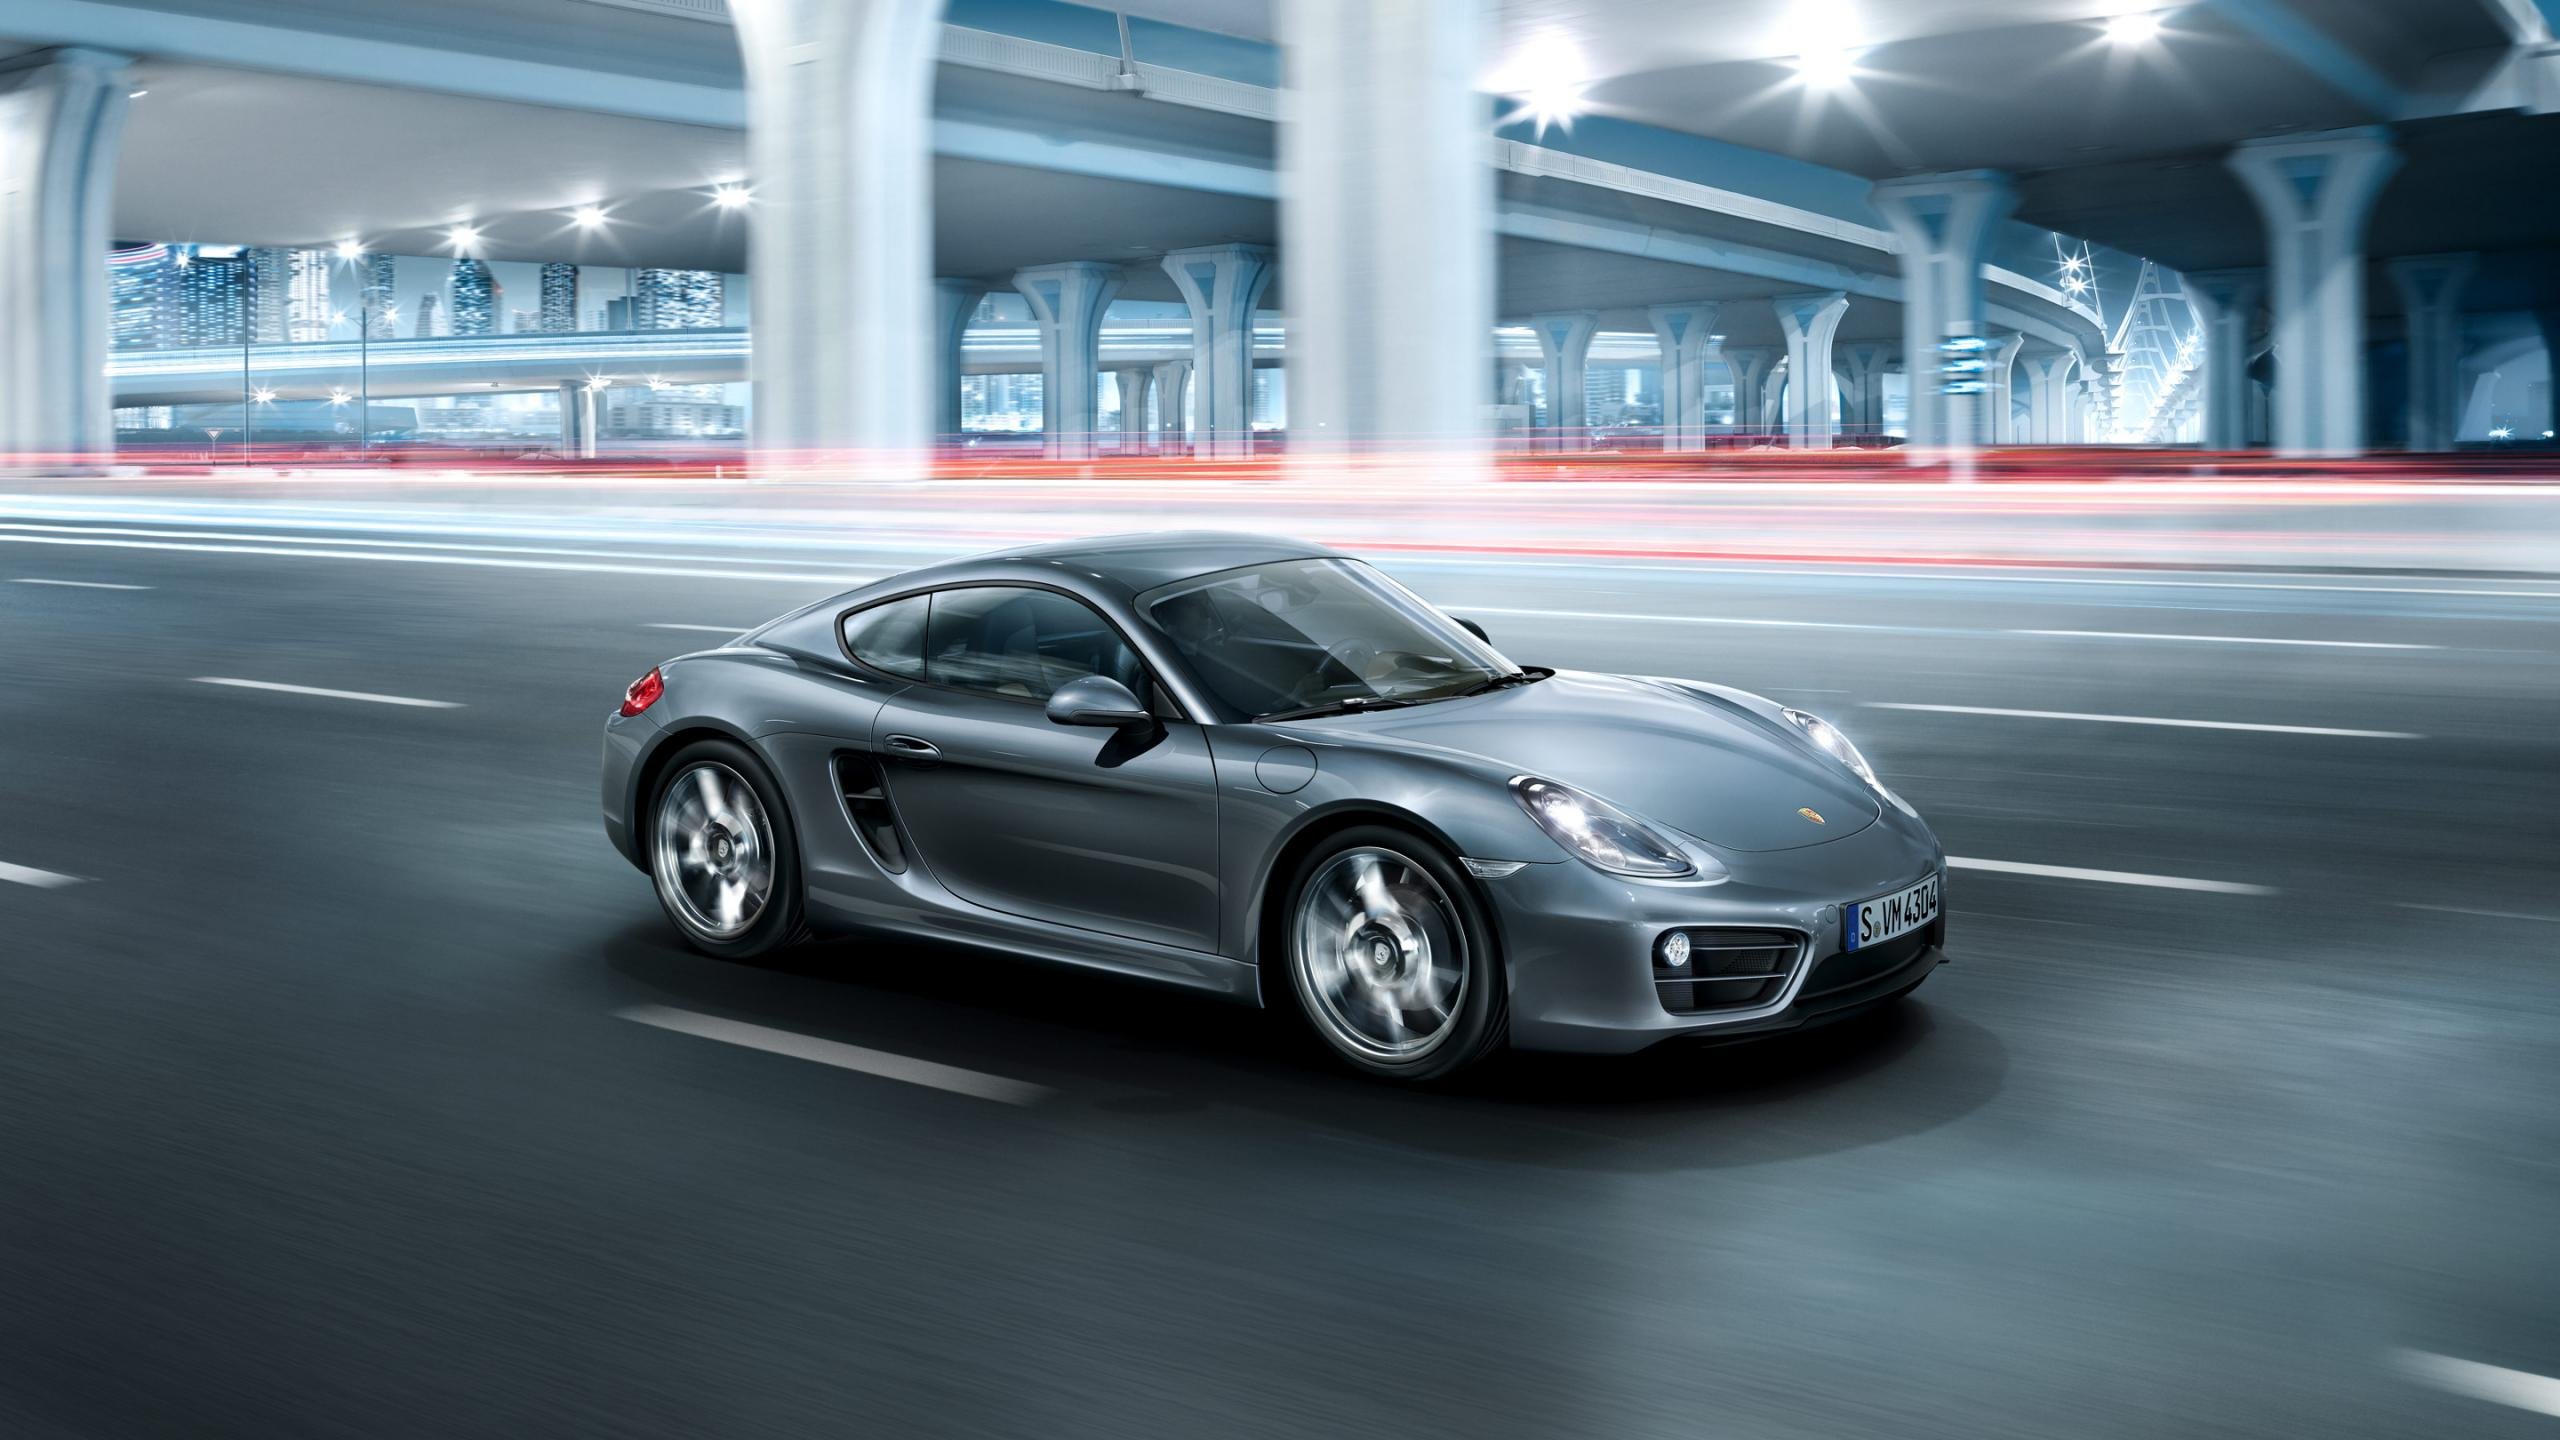 Best Porsche Cayman background ID:322461 for High Resolution hd 2560x1440 computer